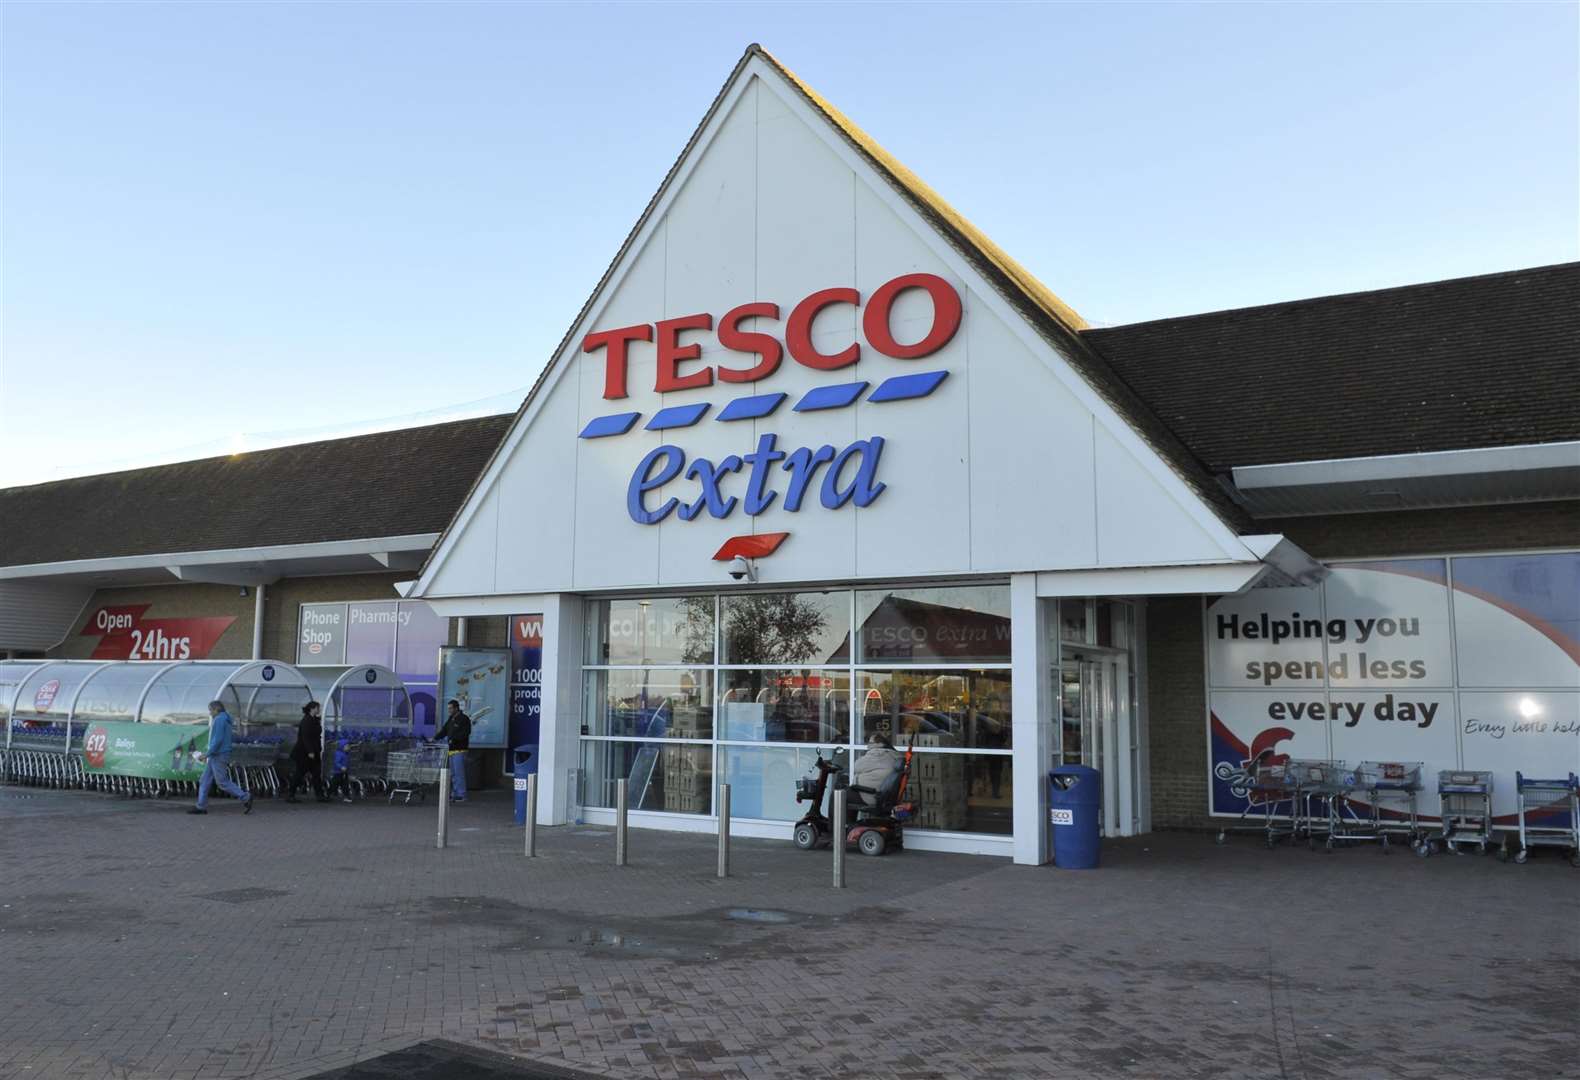 Tesco's impact in Kent as the supermarket celebrates 100 years